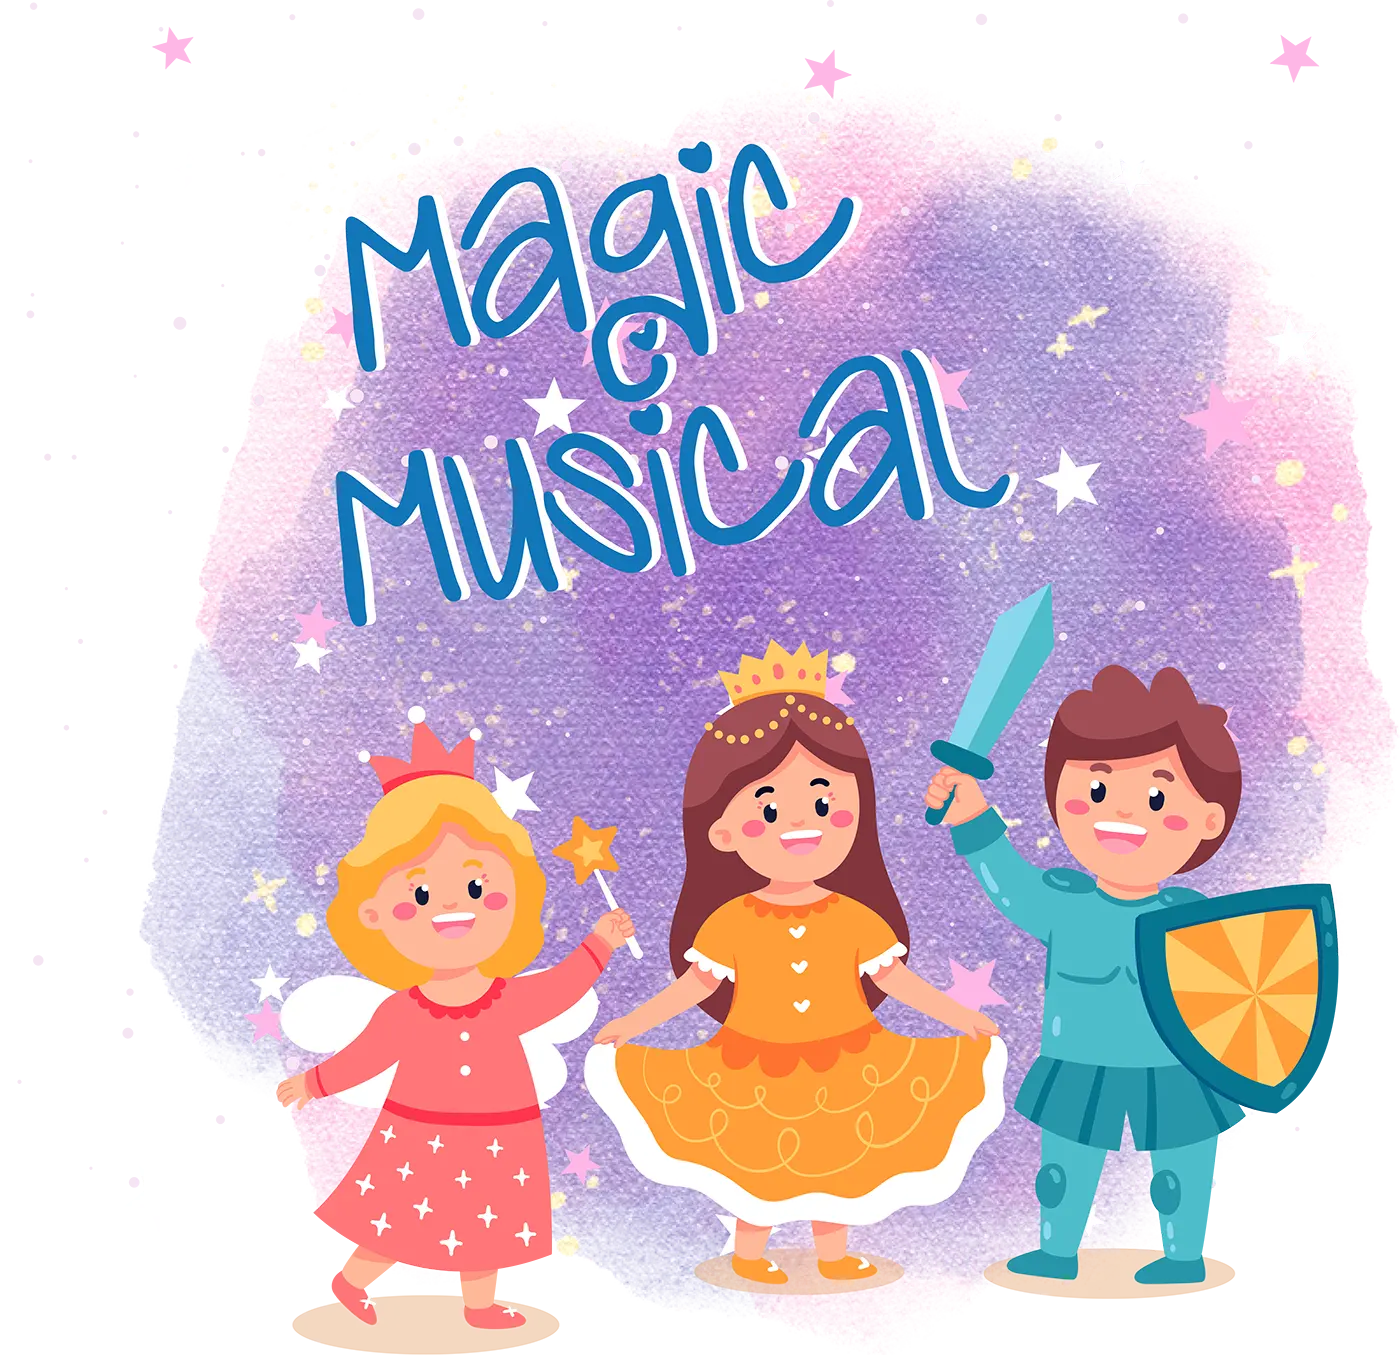 Magic musical